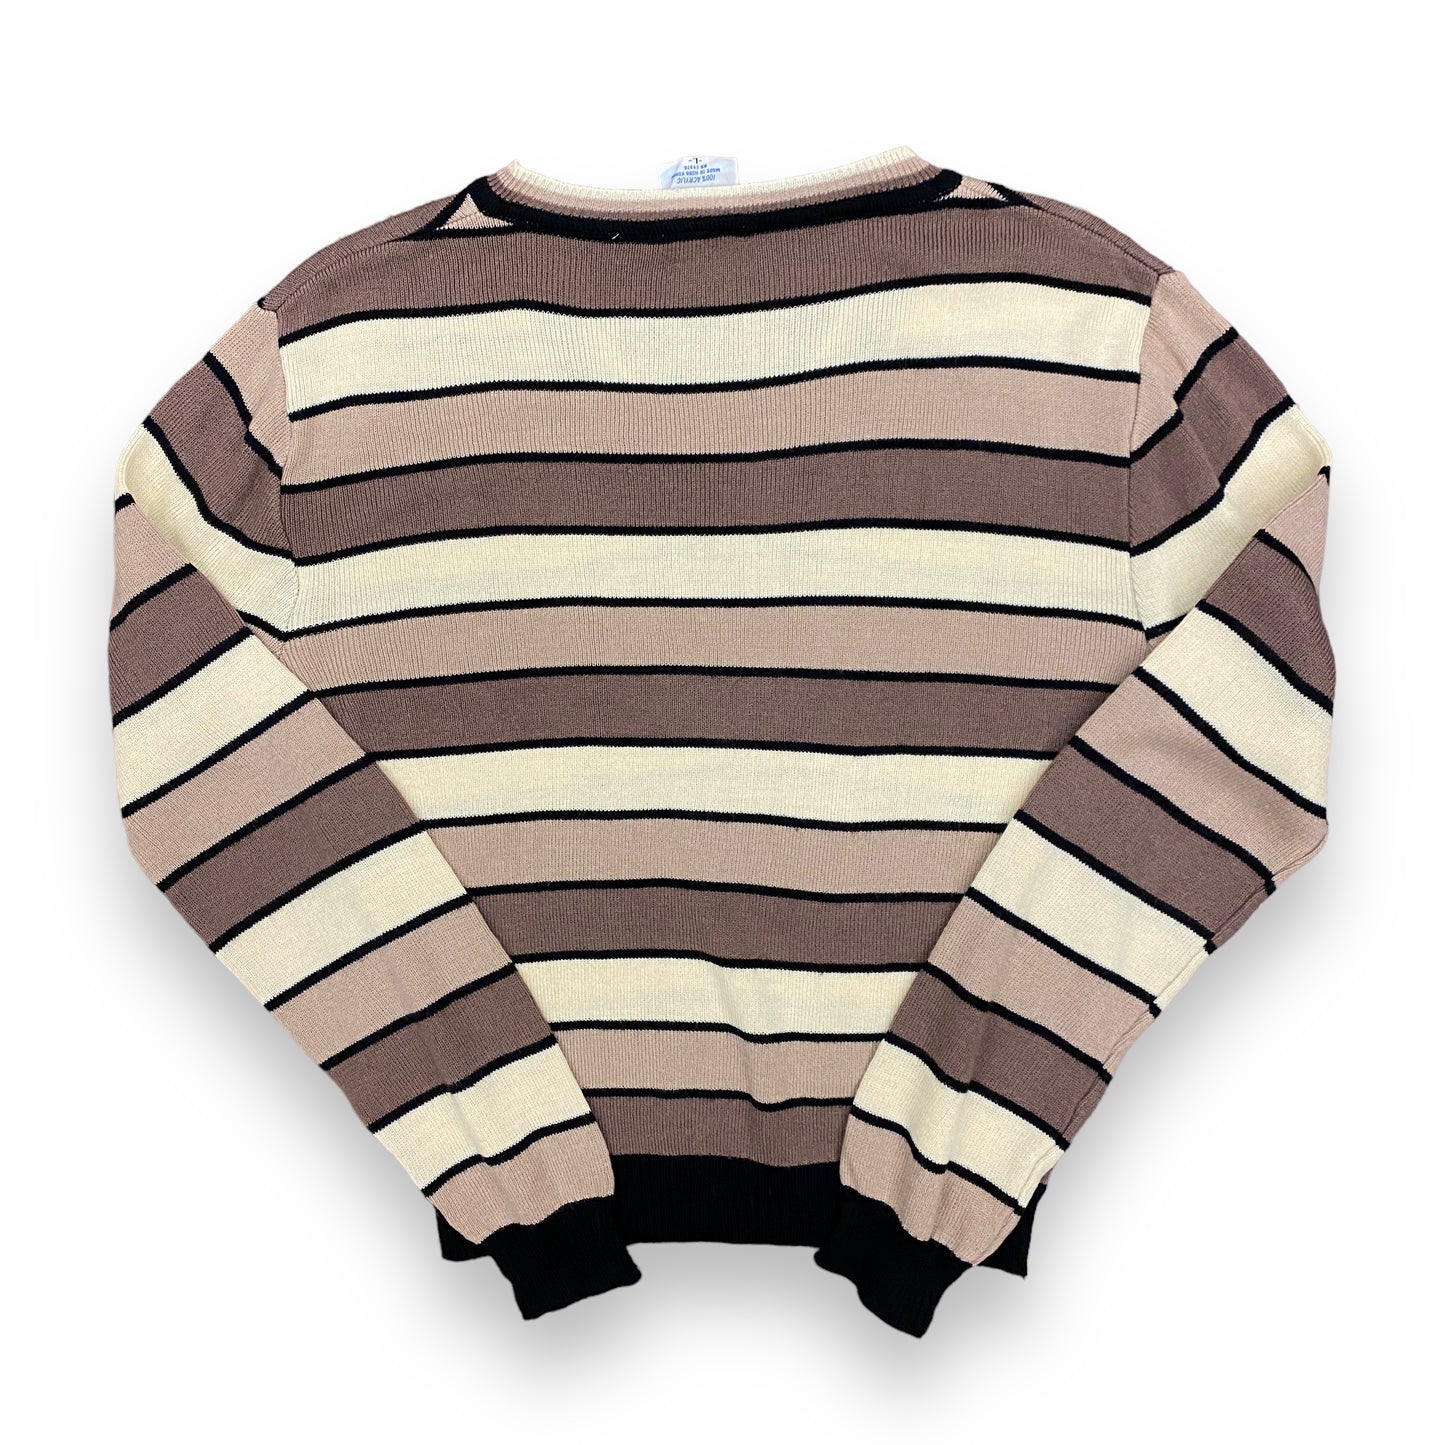 Vintage 1970s Striped Tan & Brown V-Neck Sweater - Size Large (Fits S/M)